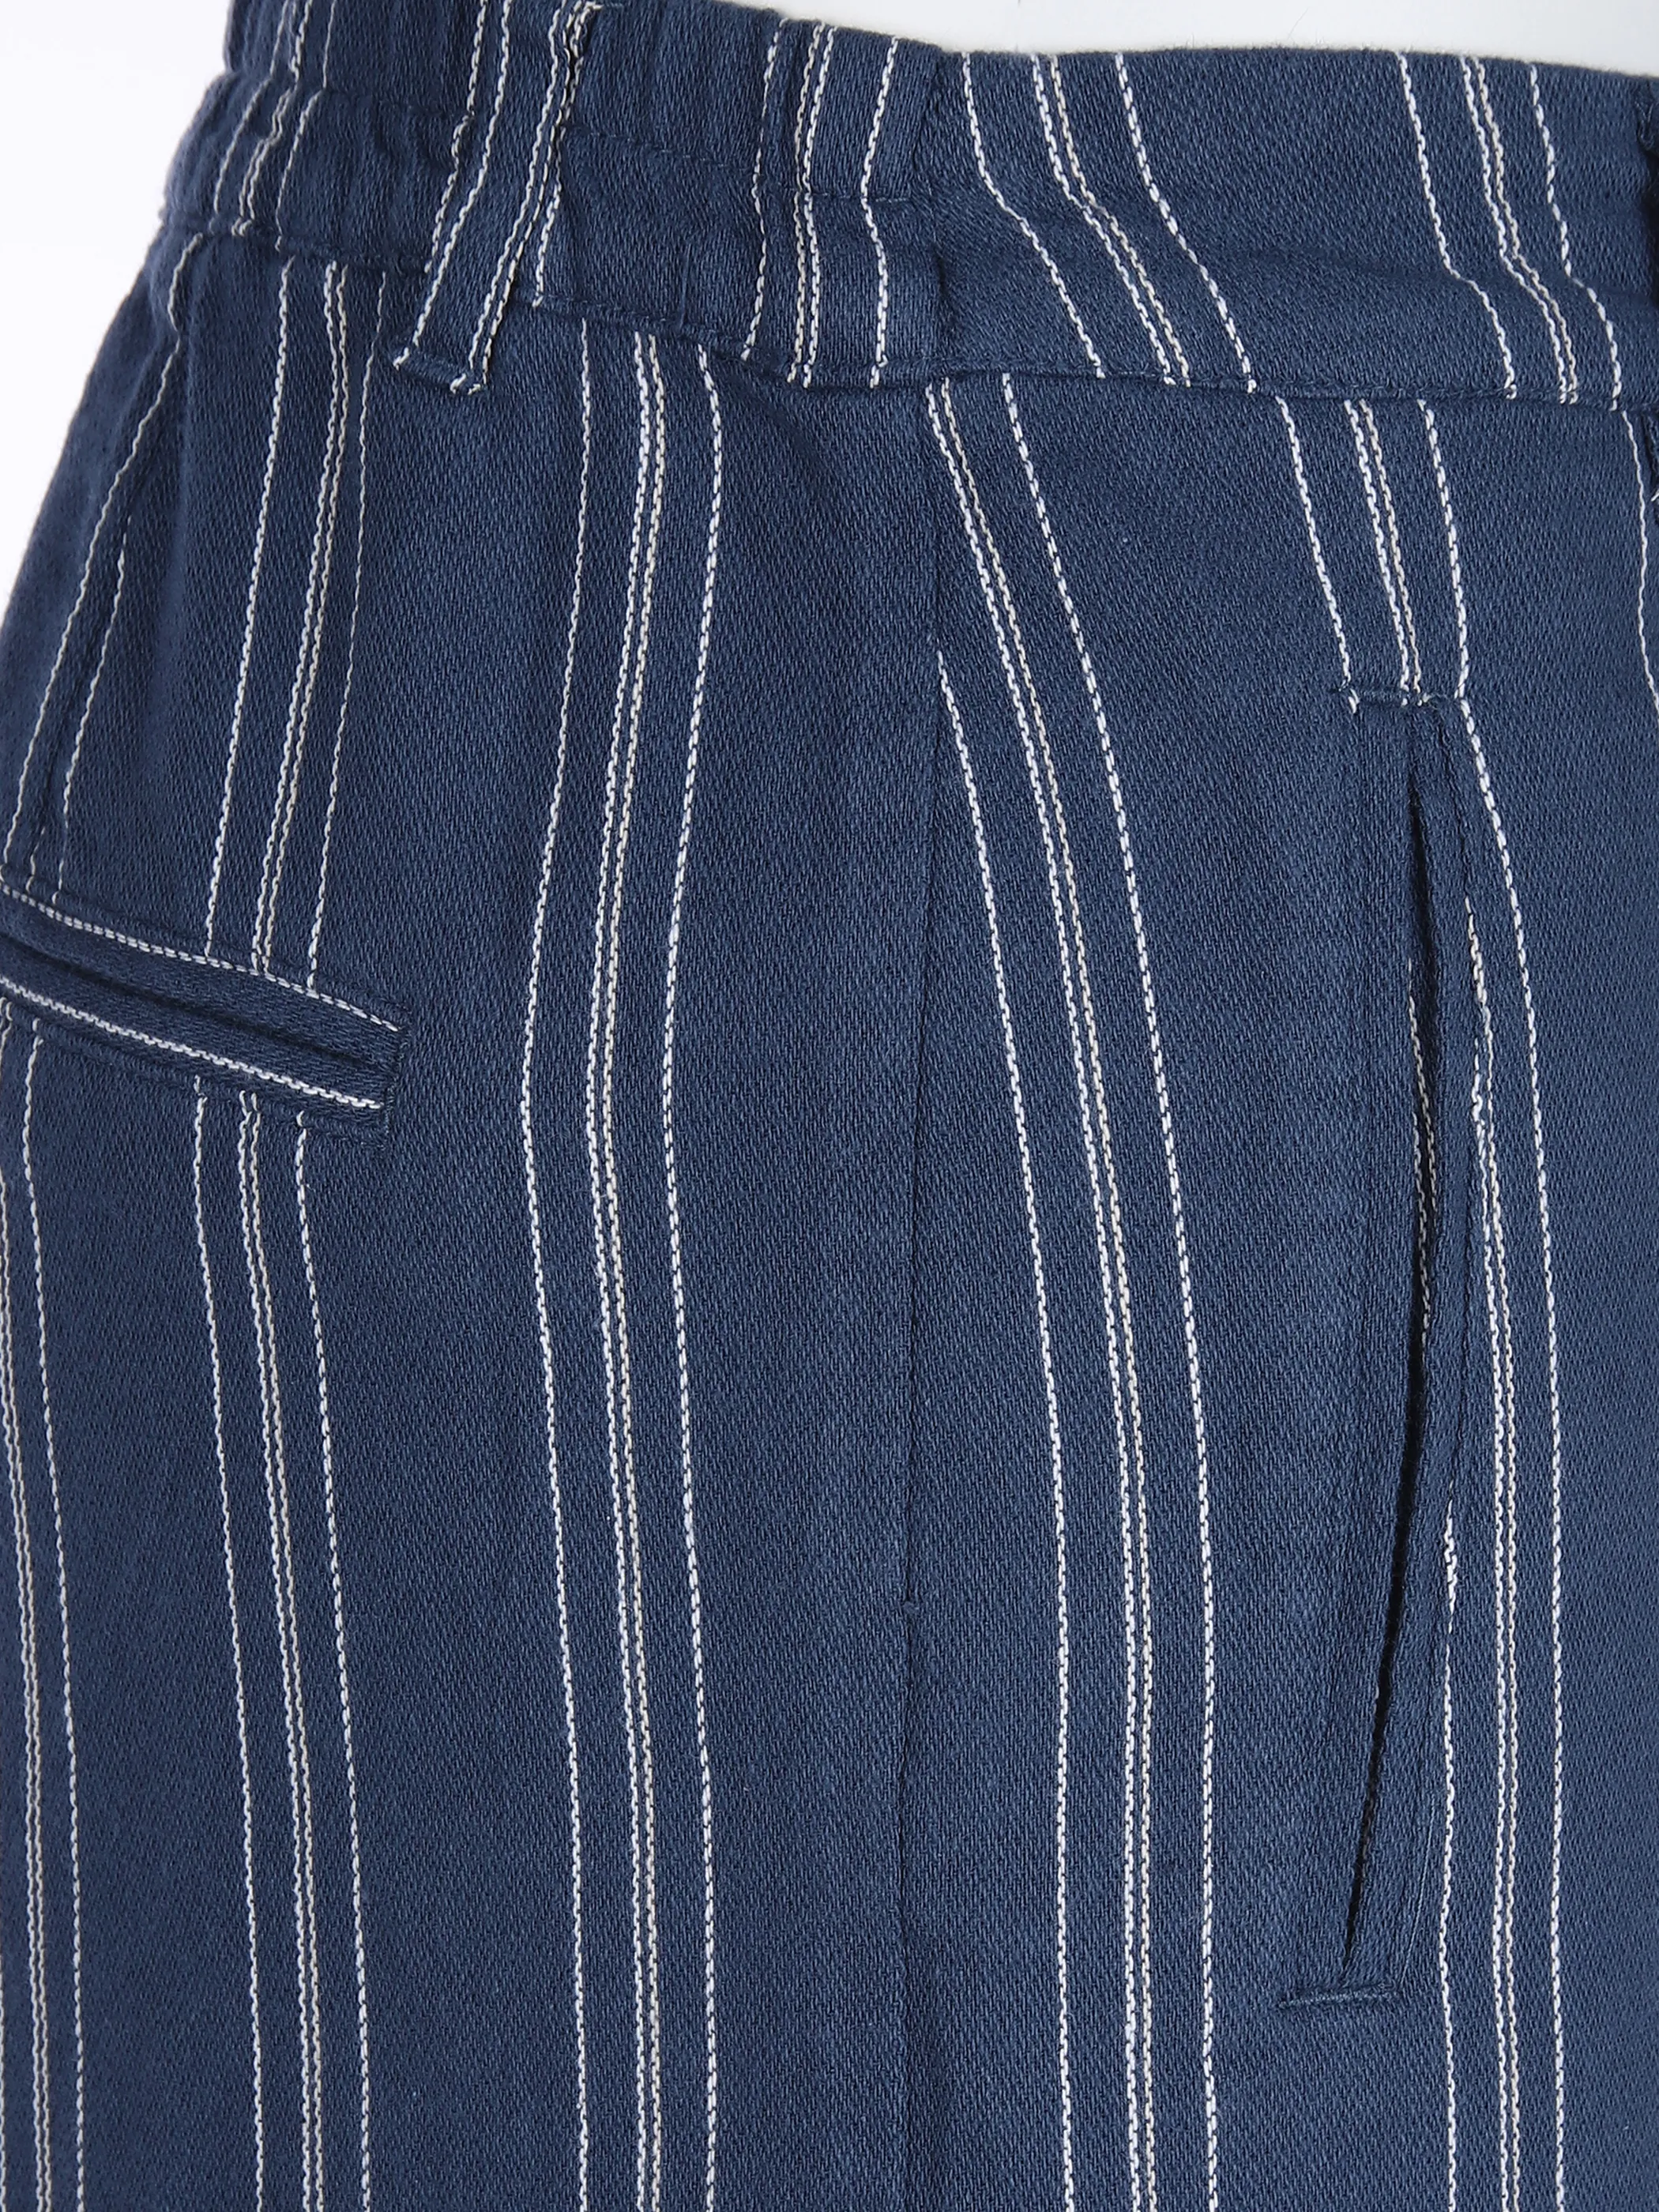 Tom Tailor 1031280 pants culotte striped Blau 865225 29534 3